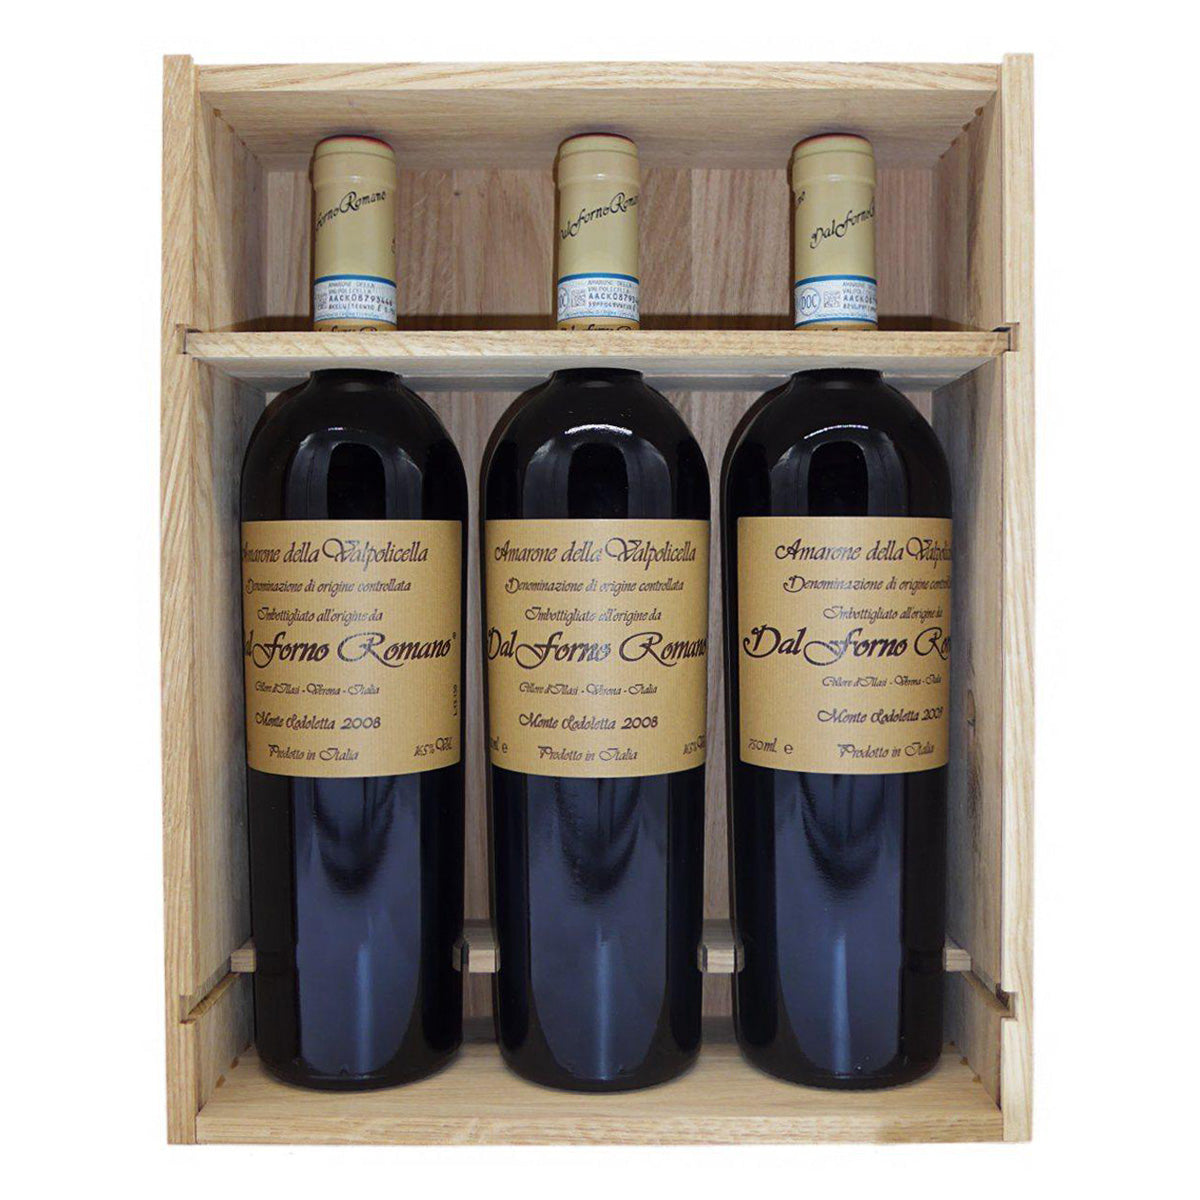 Dal Forno Romano Historical Release, Amarone 2008, Amarone 2009, Wine-set of 3 bottles of 750ml Italian red wine, made from Corvina, Rondinella, Croatina and Oseleta, from Amarone della Valpolicella, Veneto, Italy – GDV Fine Wines, Hong Kong